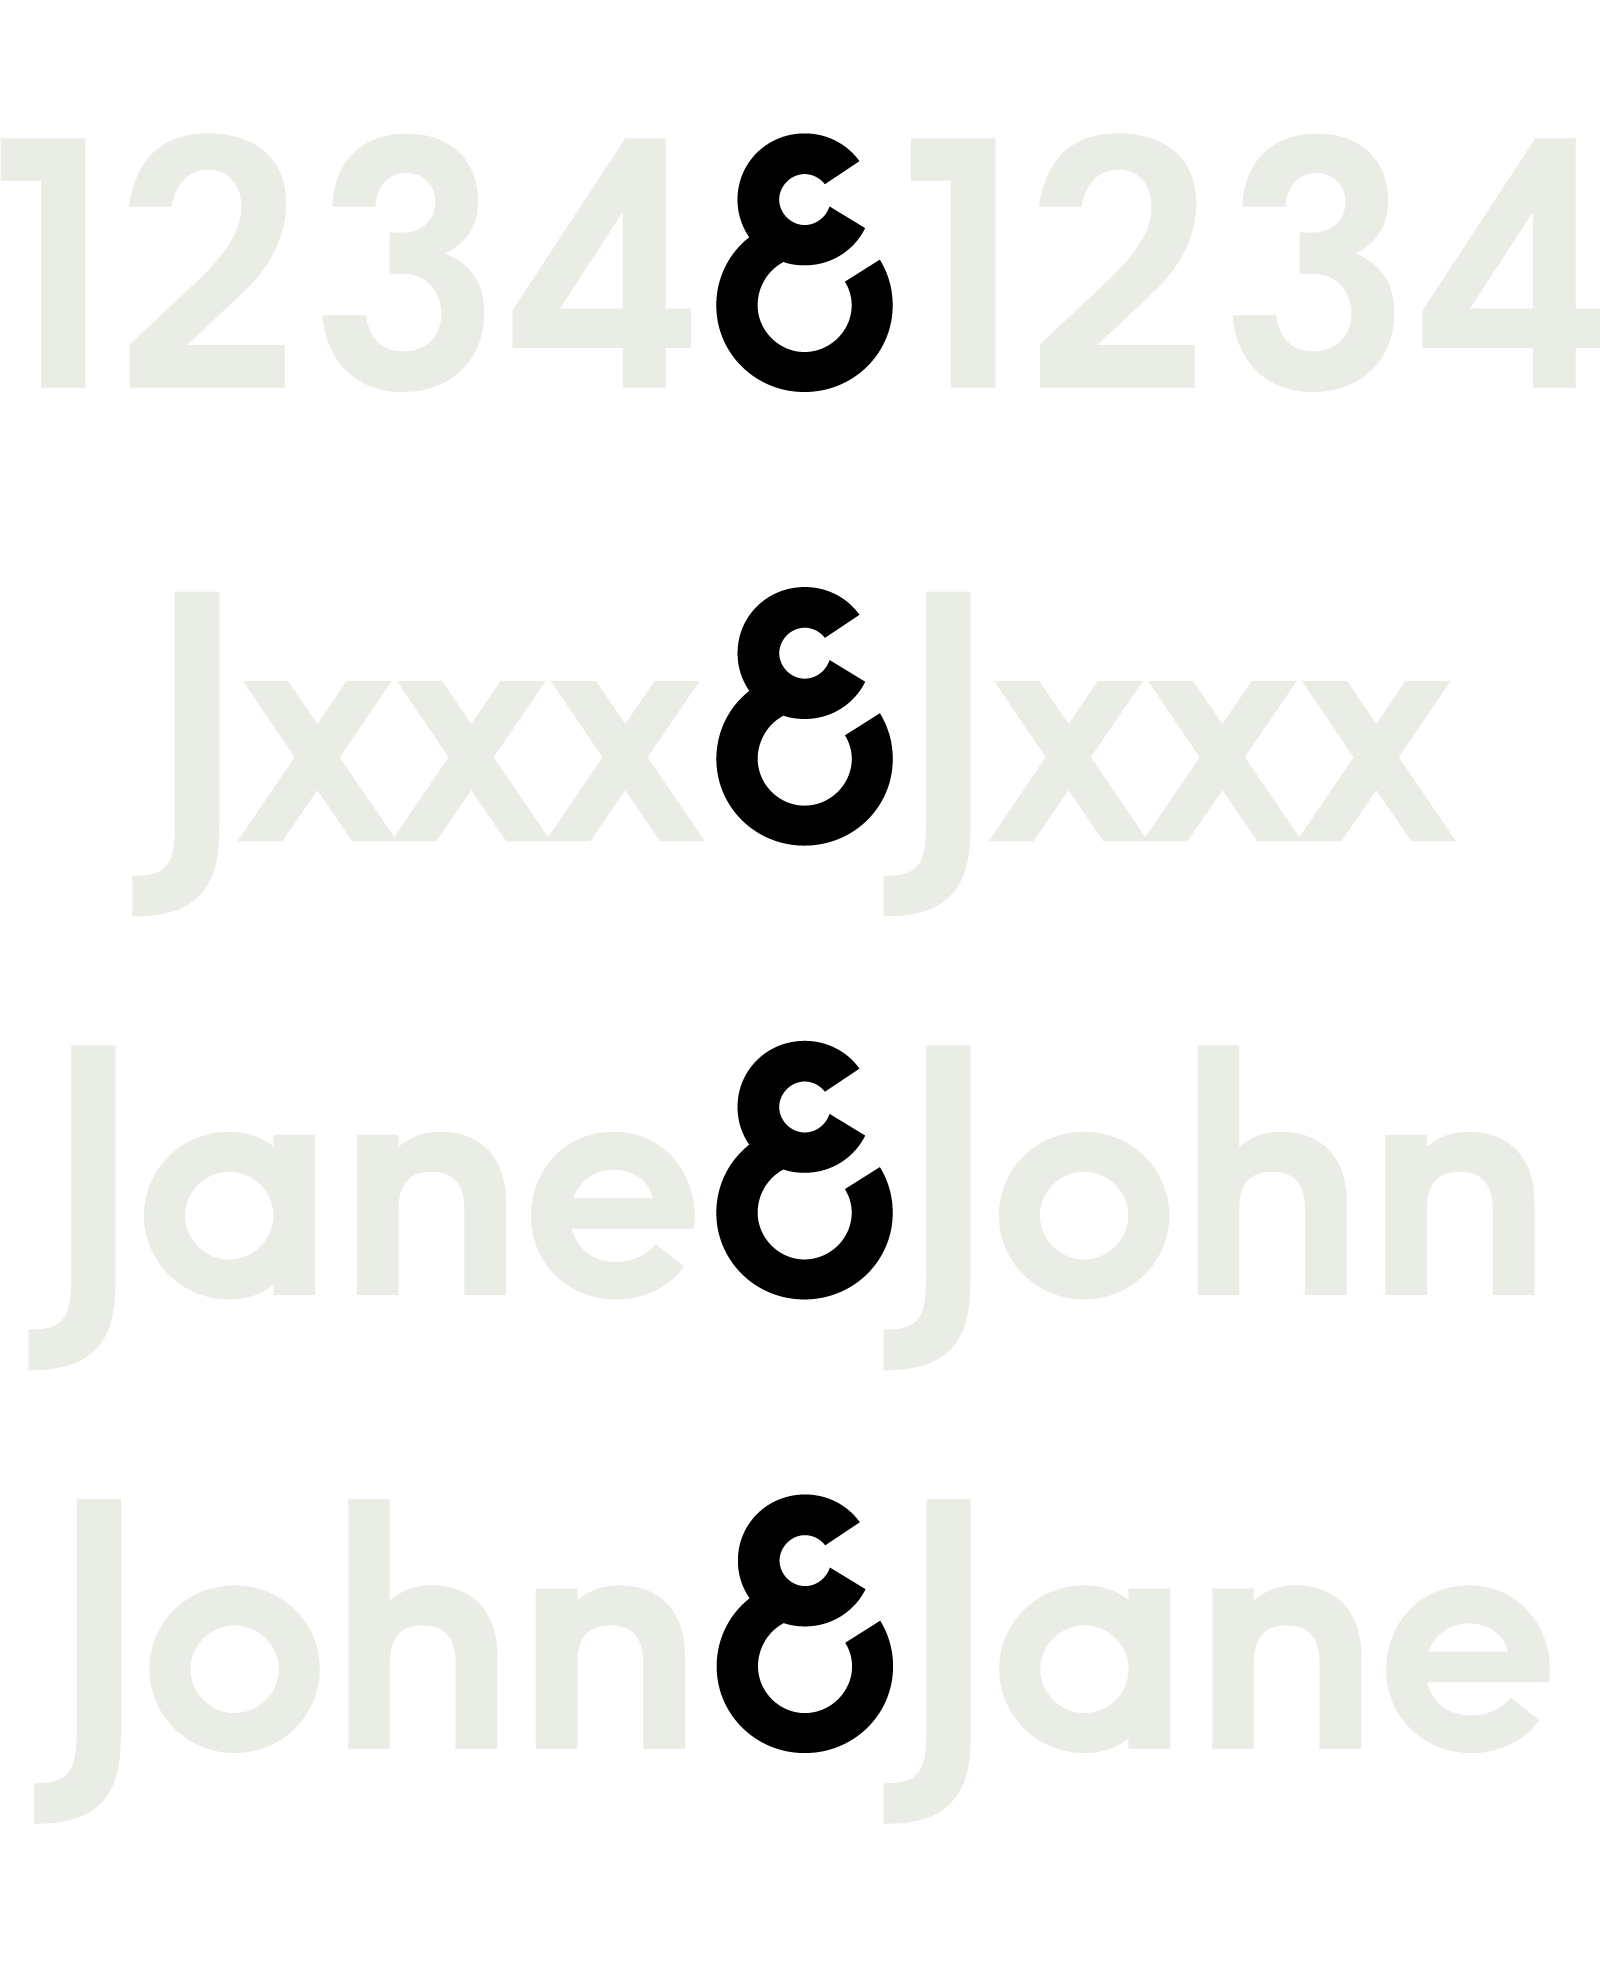 John & Jane Logo Typography Ampersand 